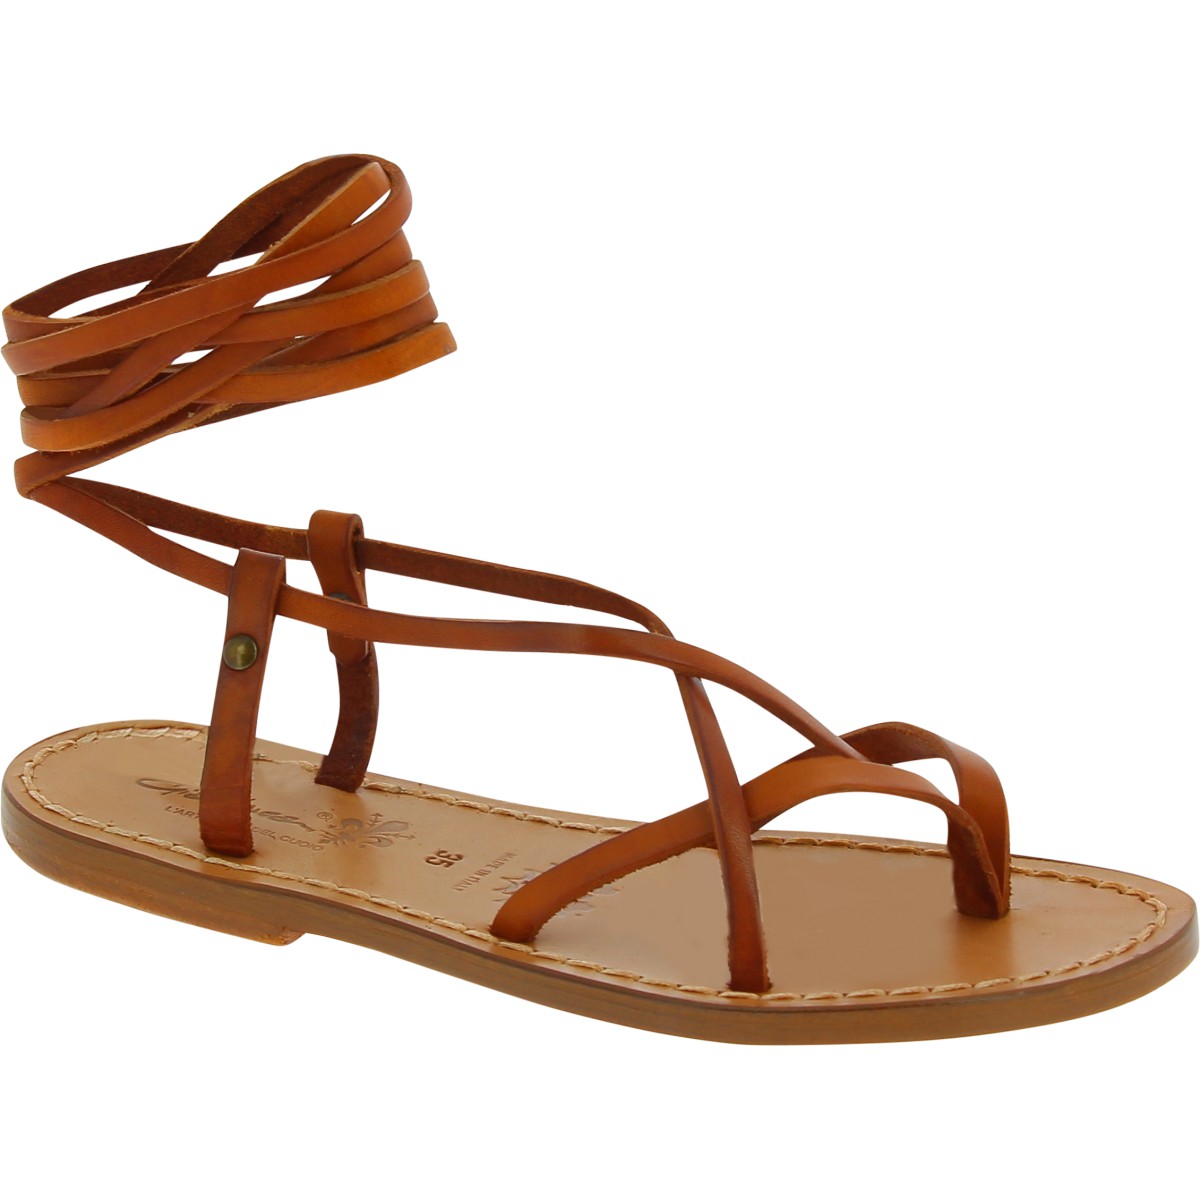 Top more than 73 womens brown leather flat sandals super hot - dedaotaonec